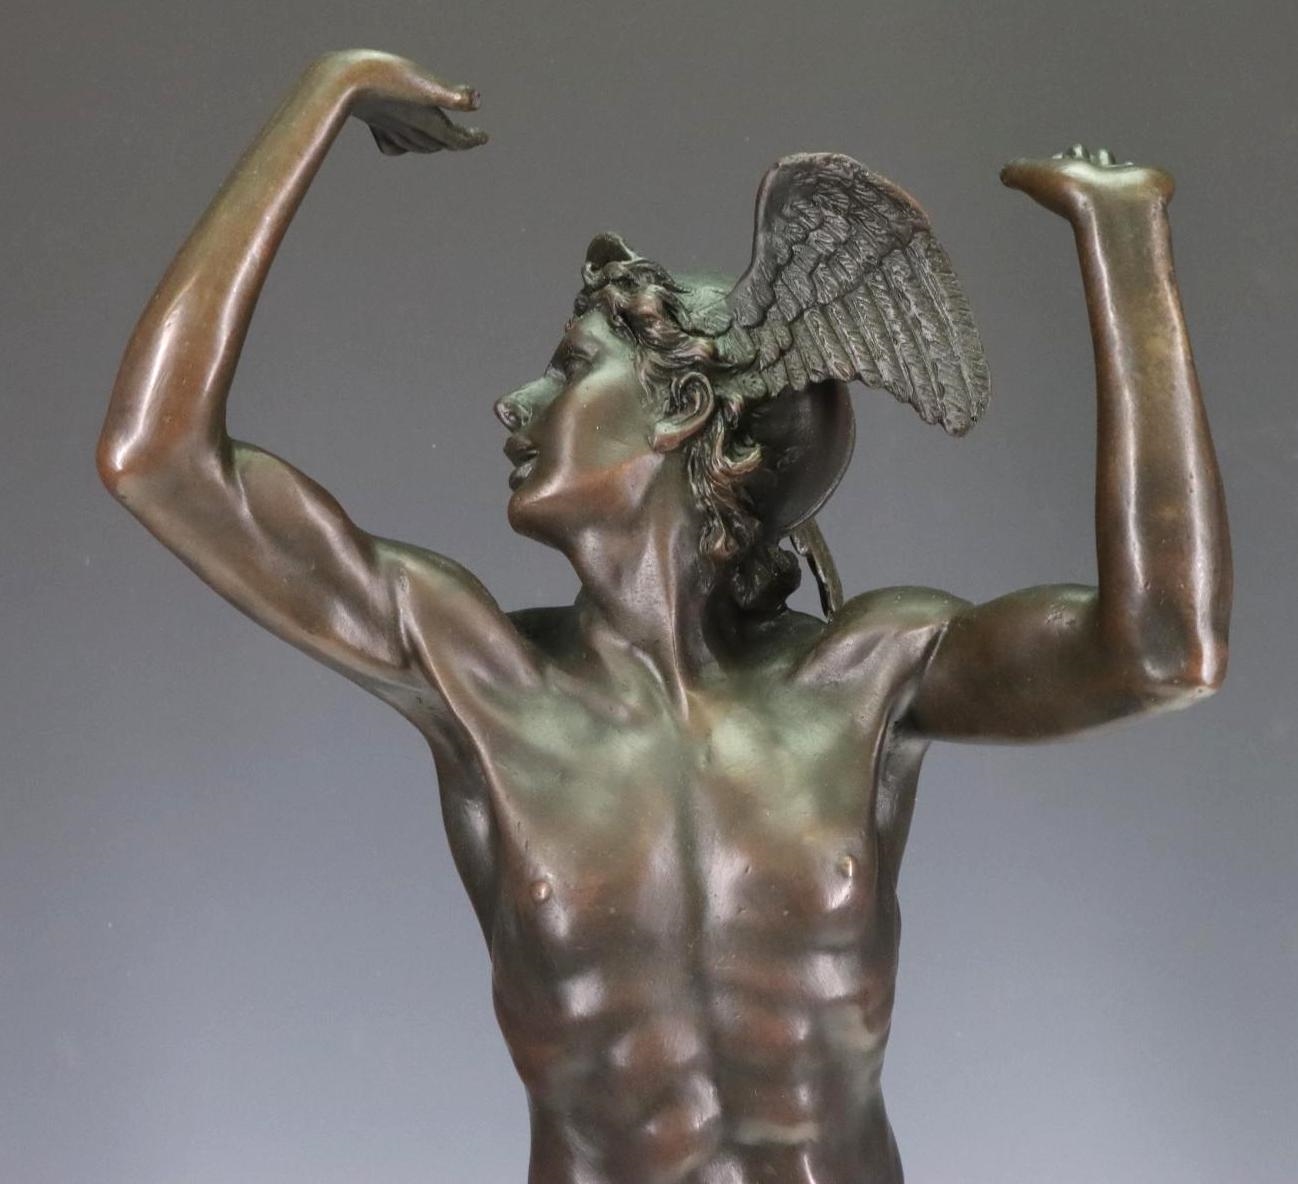 Artwork by Benvenuto Cellini, Merourio (Mercury), Made of Bronze